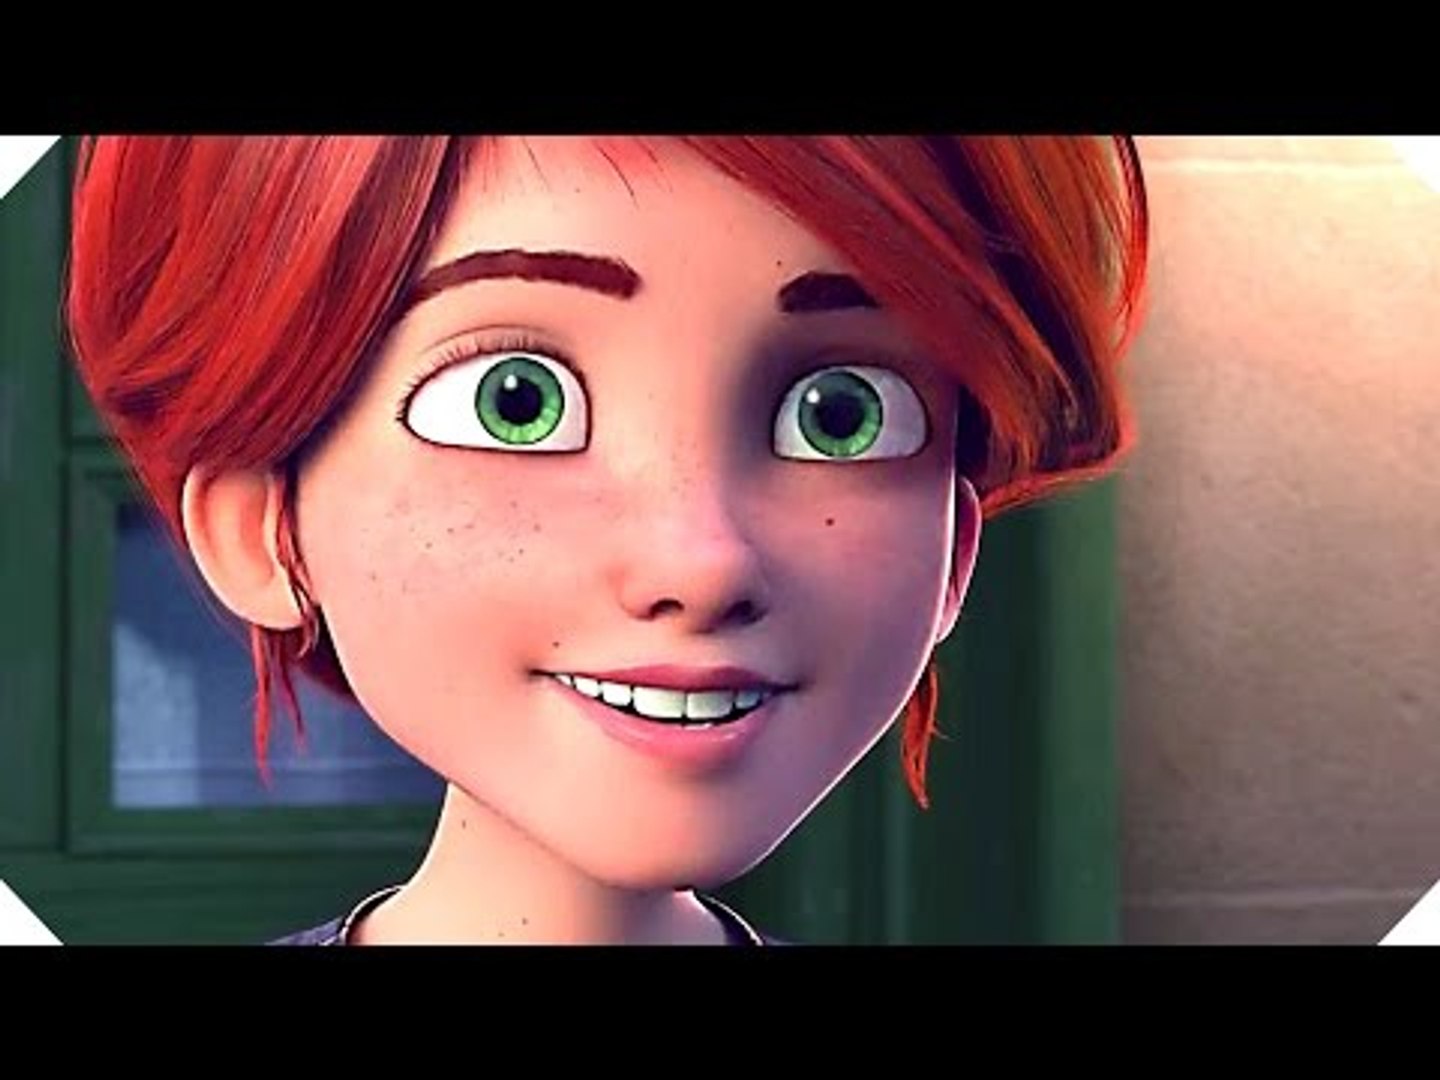 BALLERINA (Animation, Family) - TRAILER - video Dailymotion